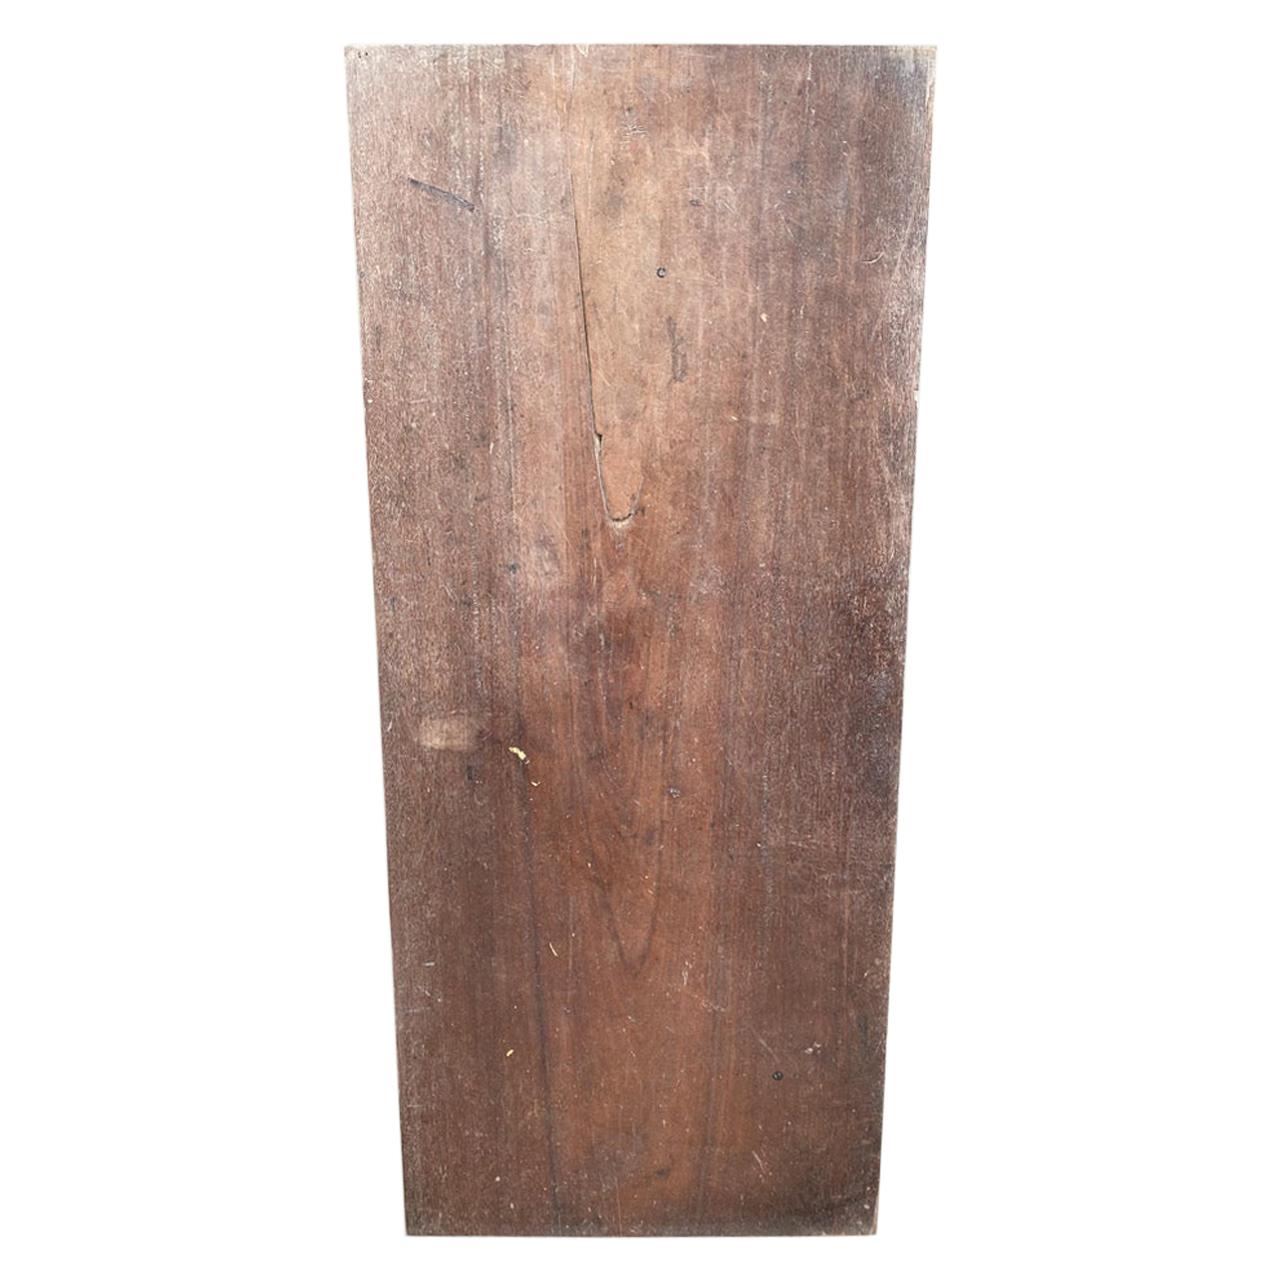 Andrianna Shamaris Nias Wood Single Panel For Sale